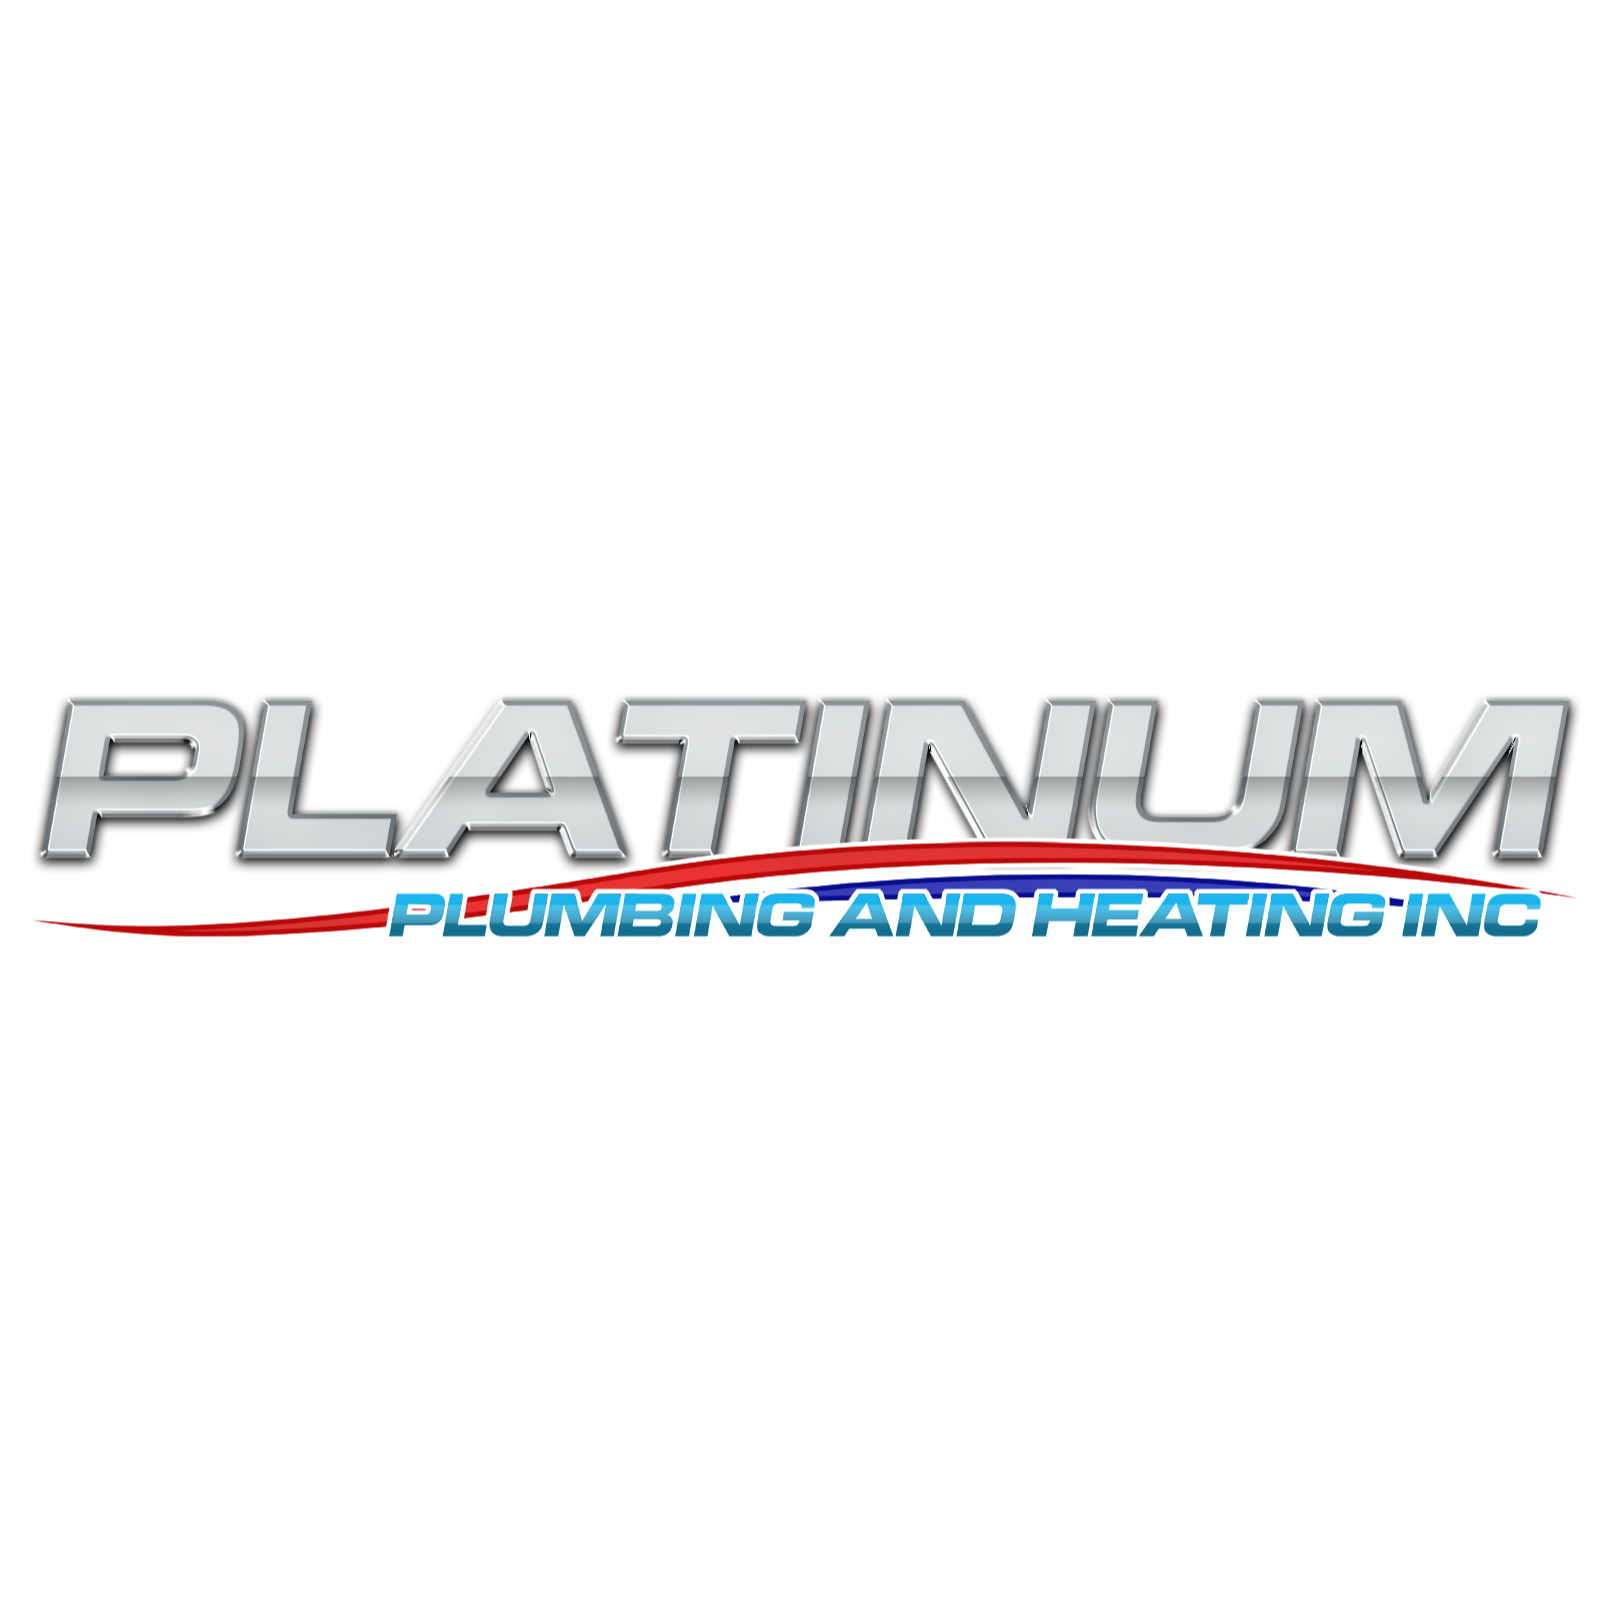 Platinum Plumbing & Heating